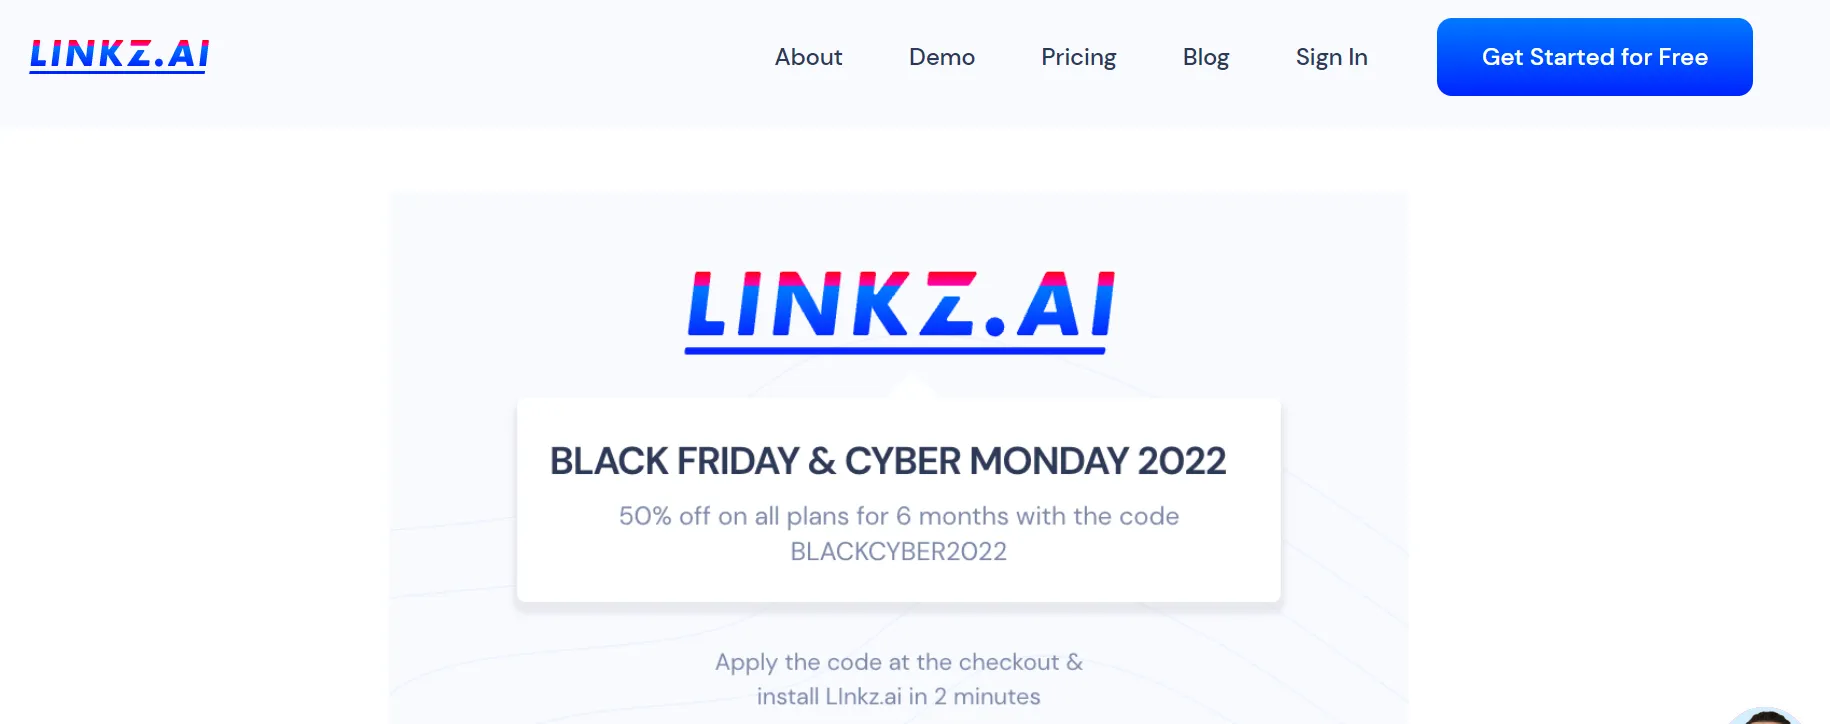 Linkz.ai-saas black friday deals